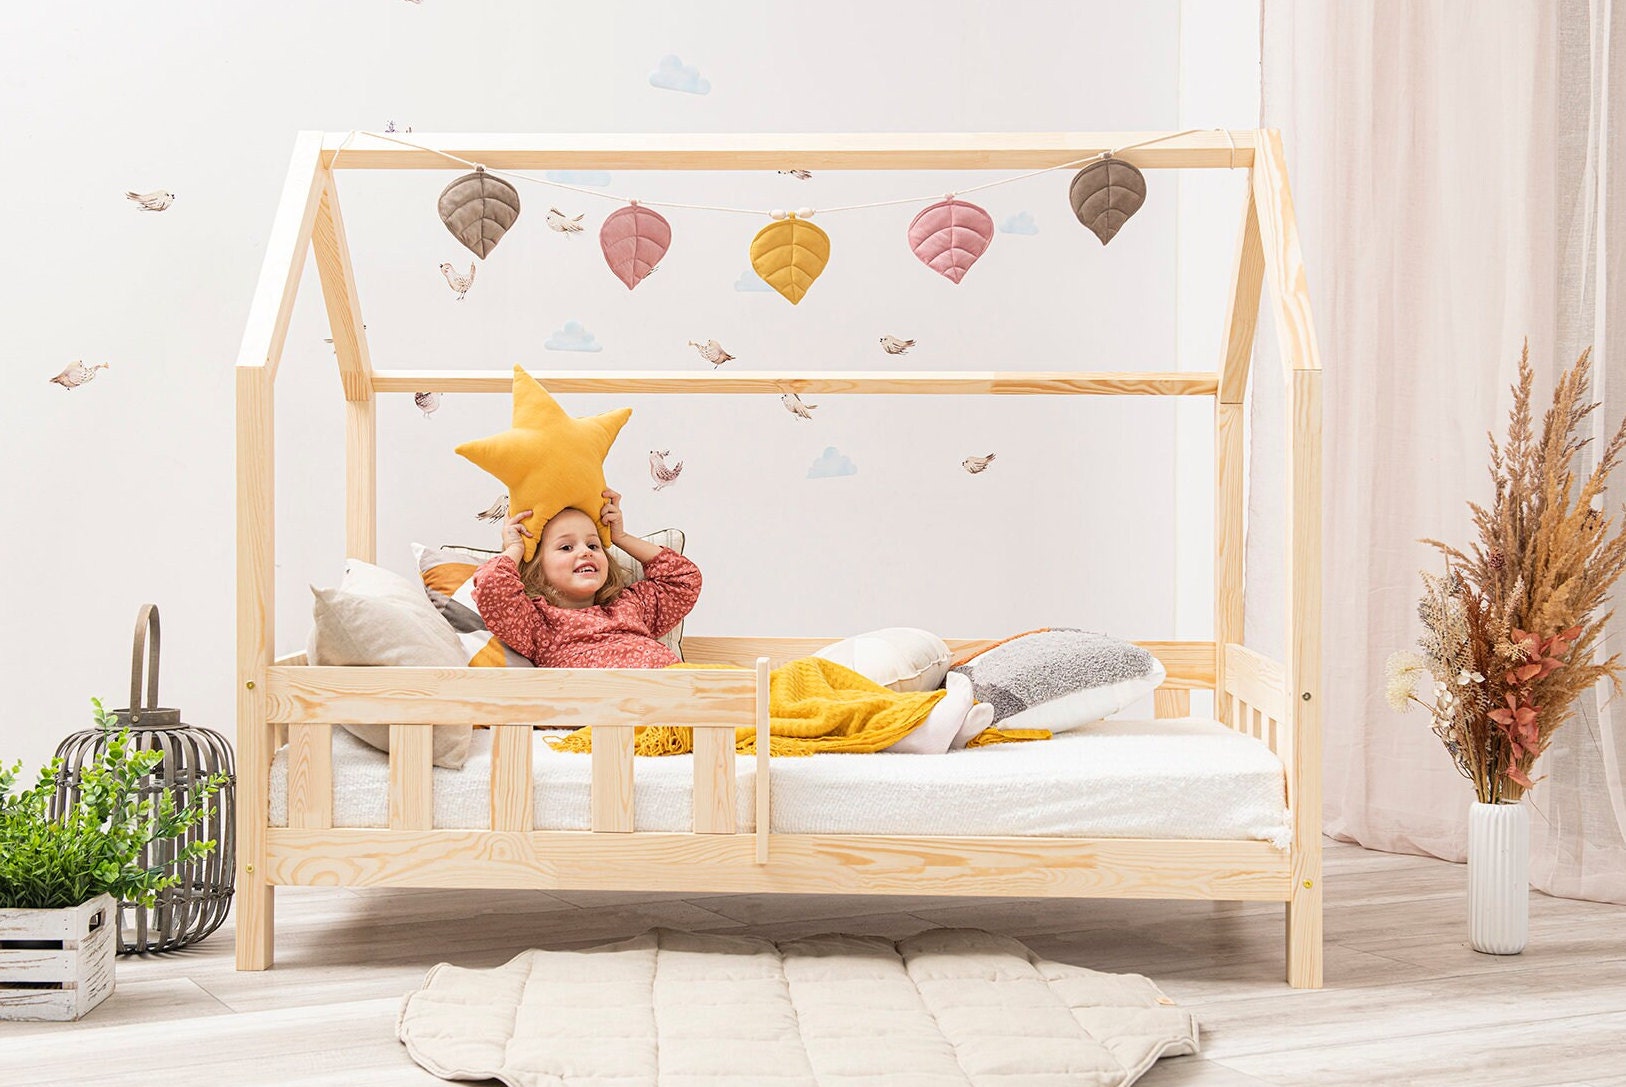 Cama infantil montessori con forma de casa de madera natural colchón 90 x  200 cm